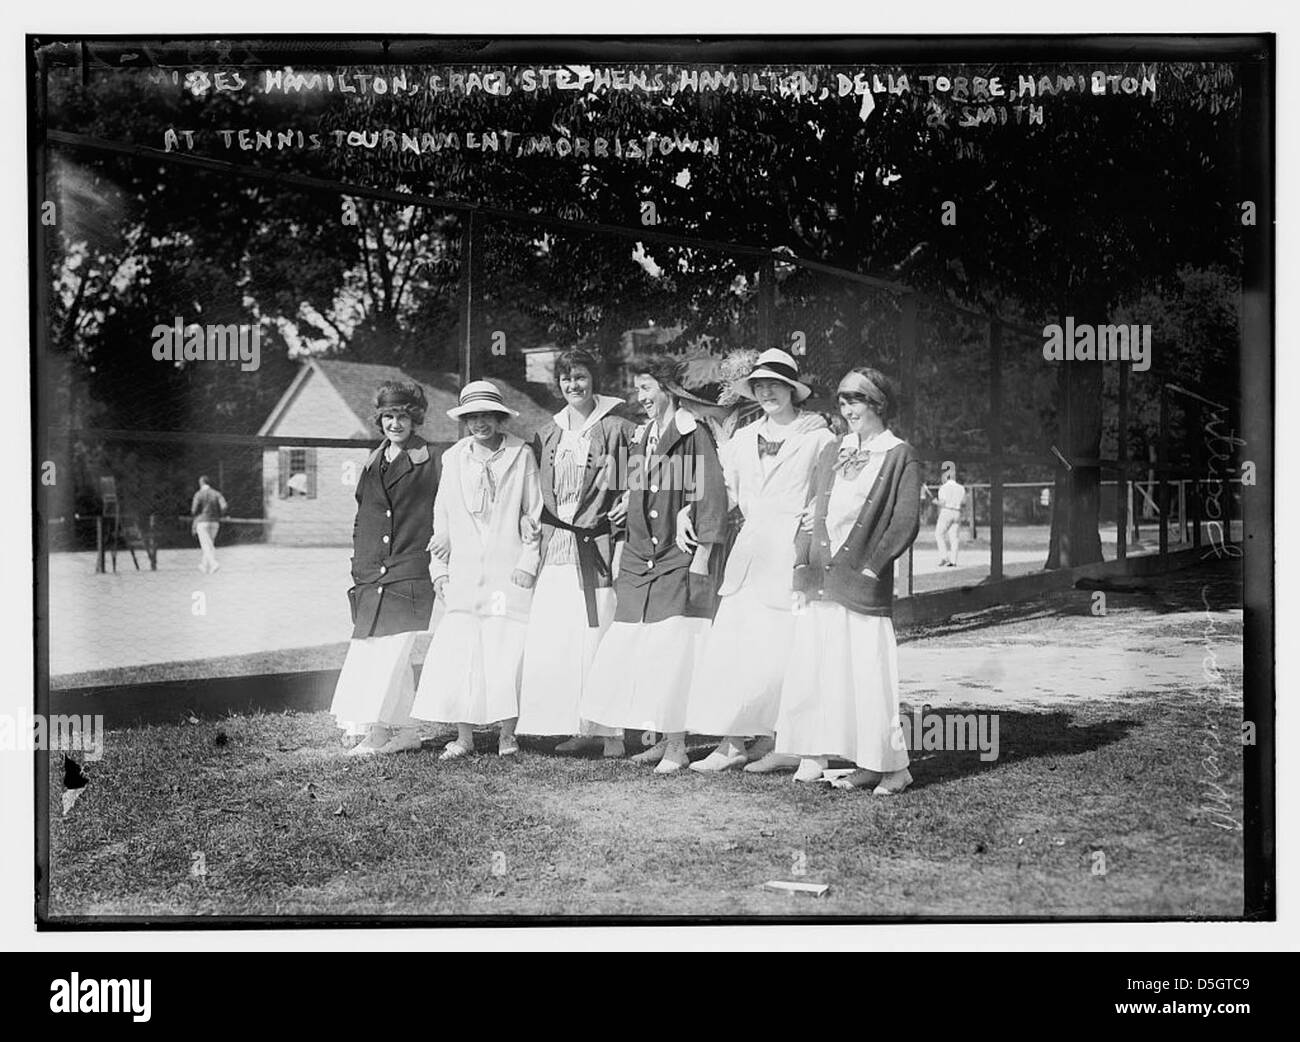 At tennis tournament, Morristown - Misses Hamilton, Crag, Stephens, Hamilton, [Gertrude] Della Torre, Hamilton and Smith (LOC) Stock Photo